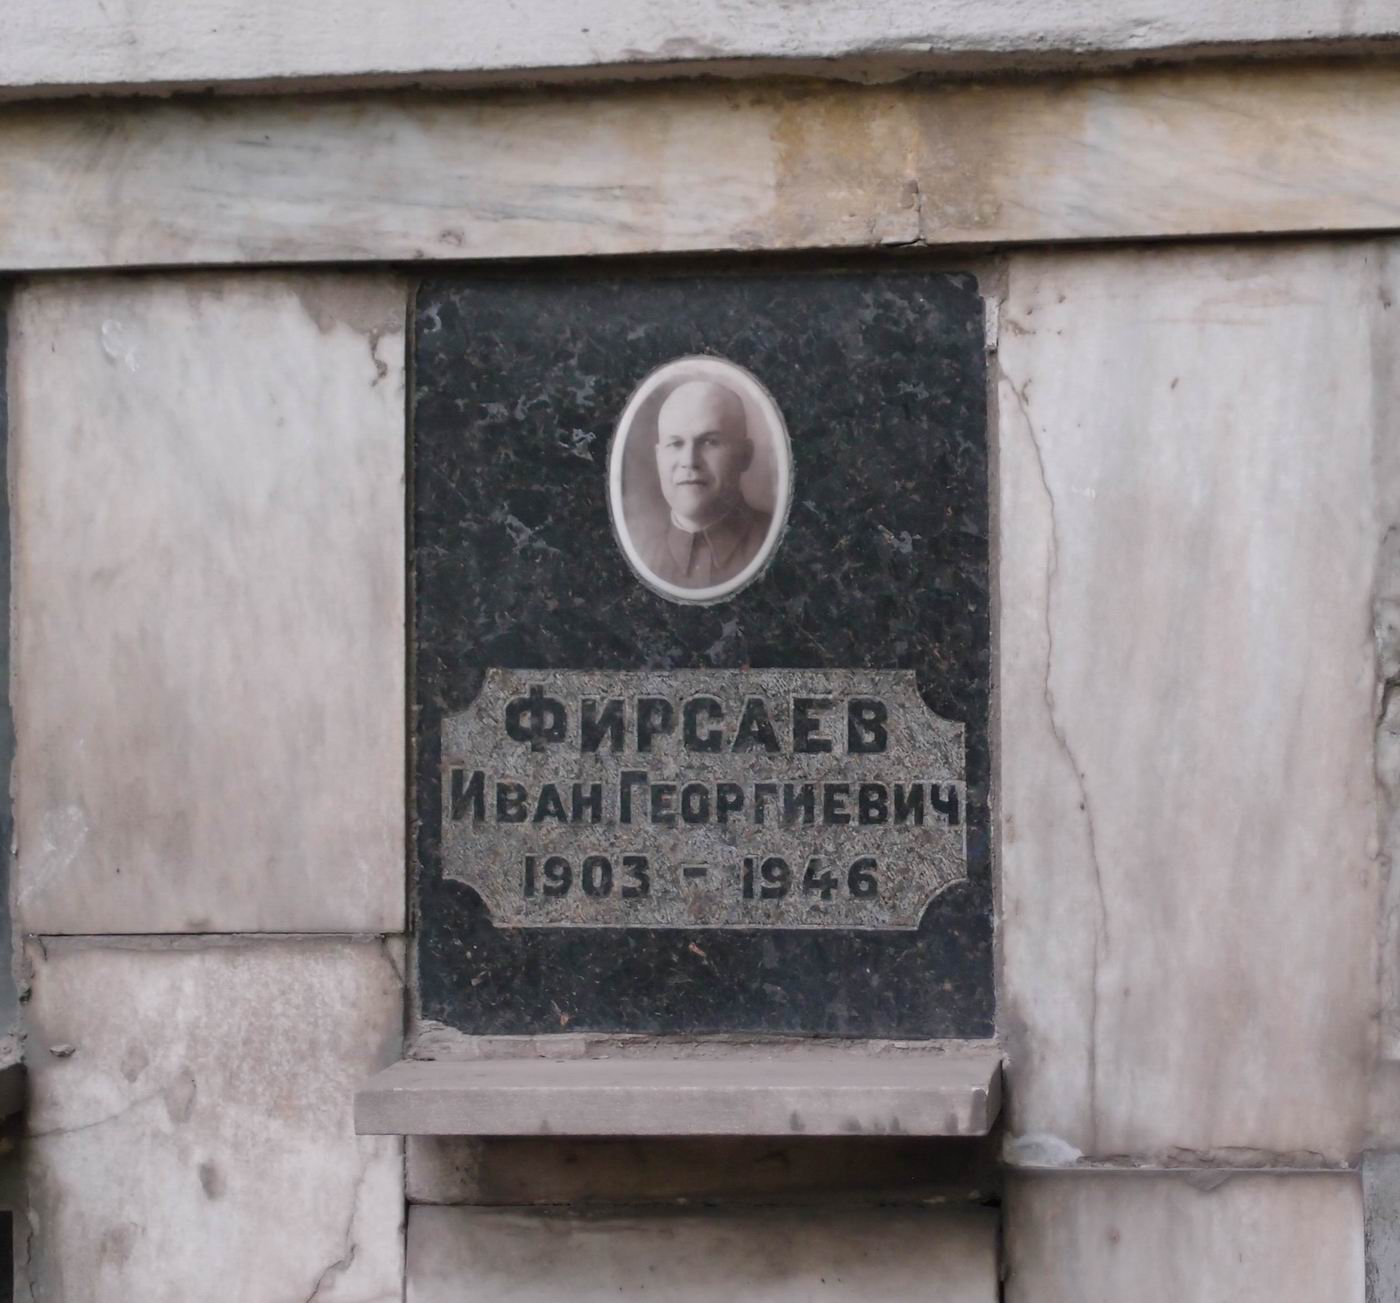 Плита на нише Фирсаева И.Г. (1903–1946), на Новодевичьем кладбище (колумбарий [99]–3–1).